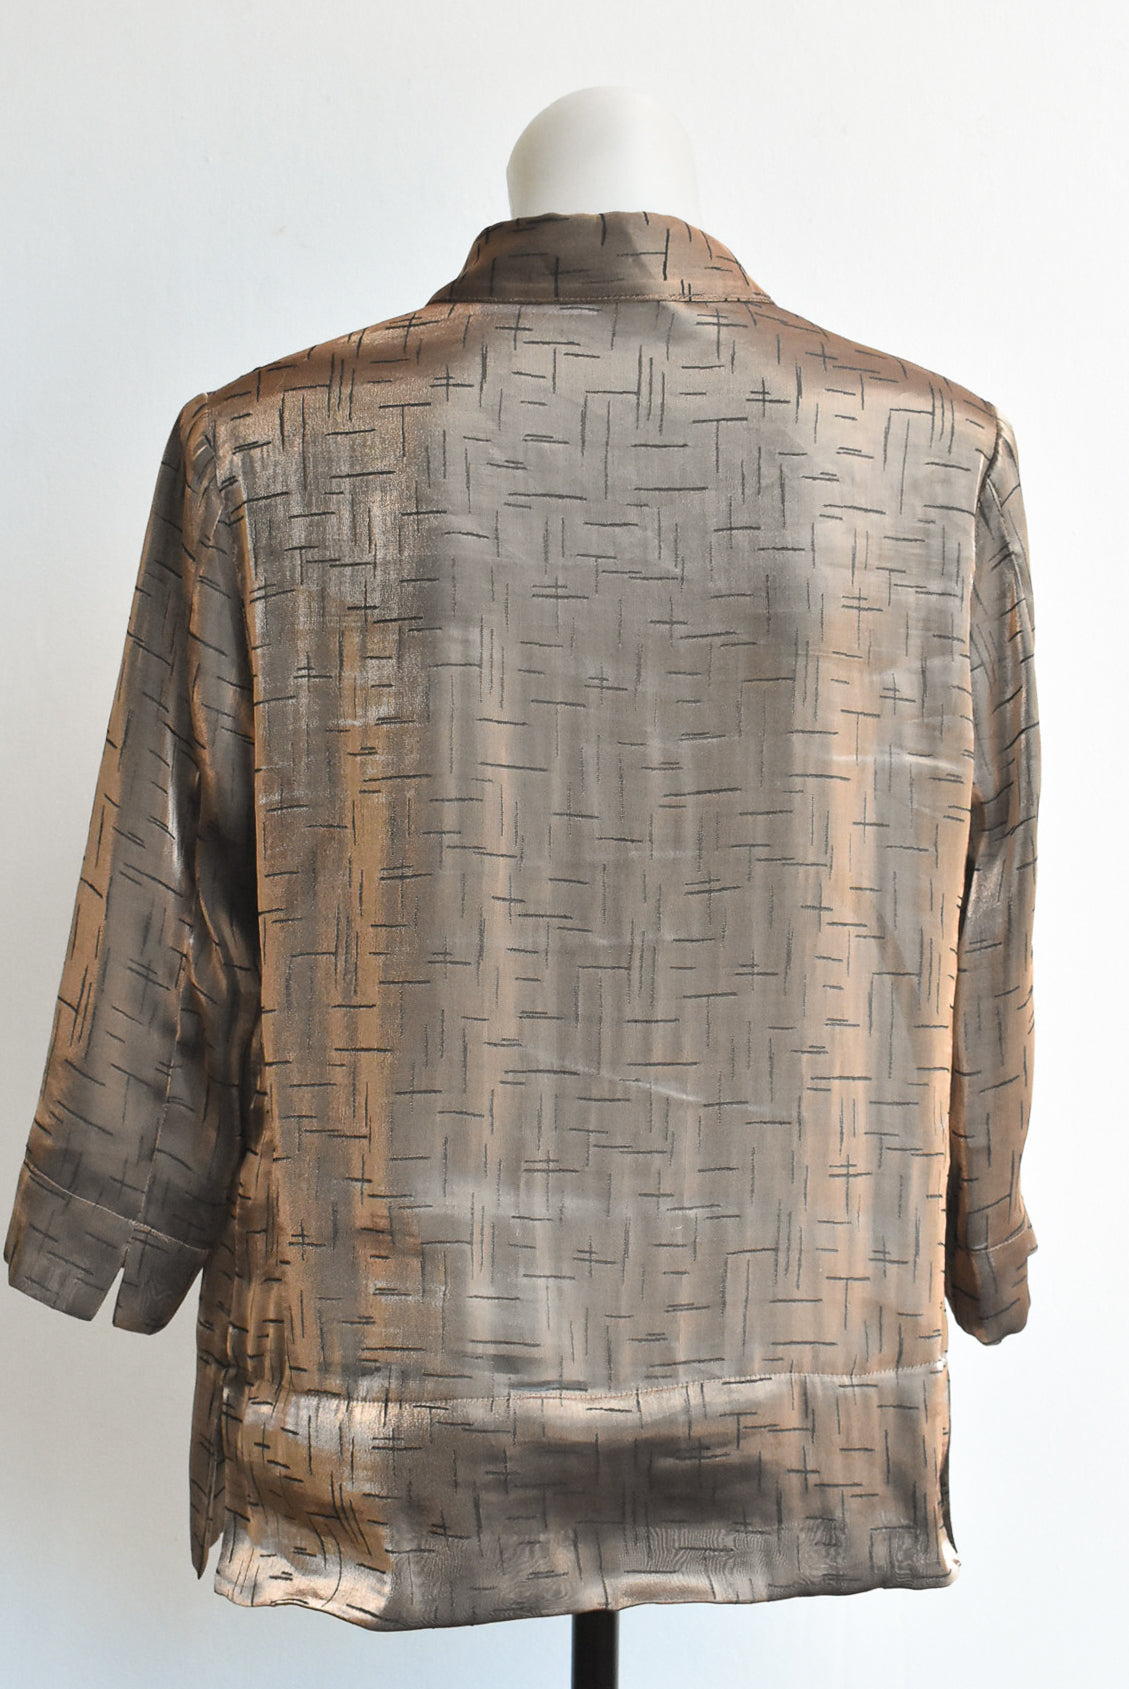 Monti sheer bronze shirt, size 12